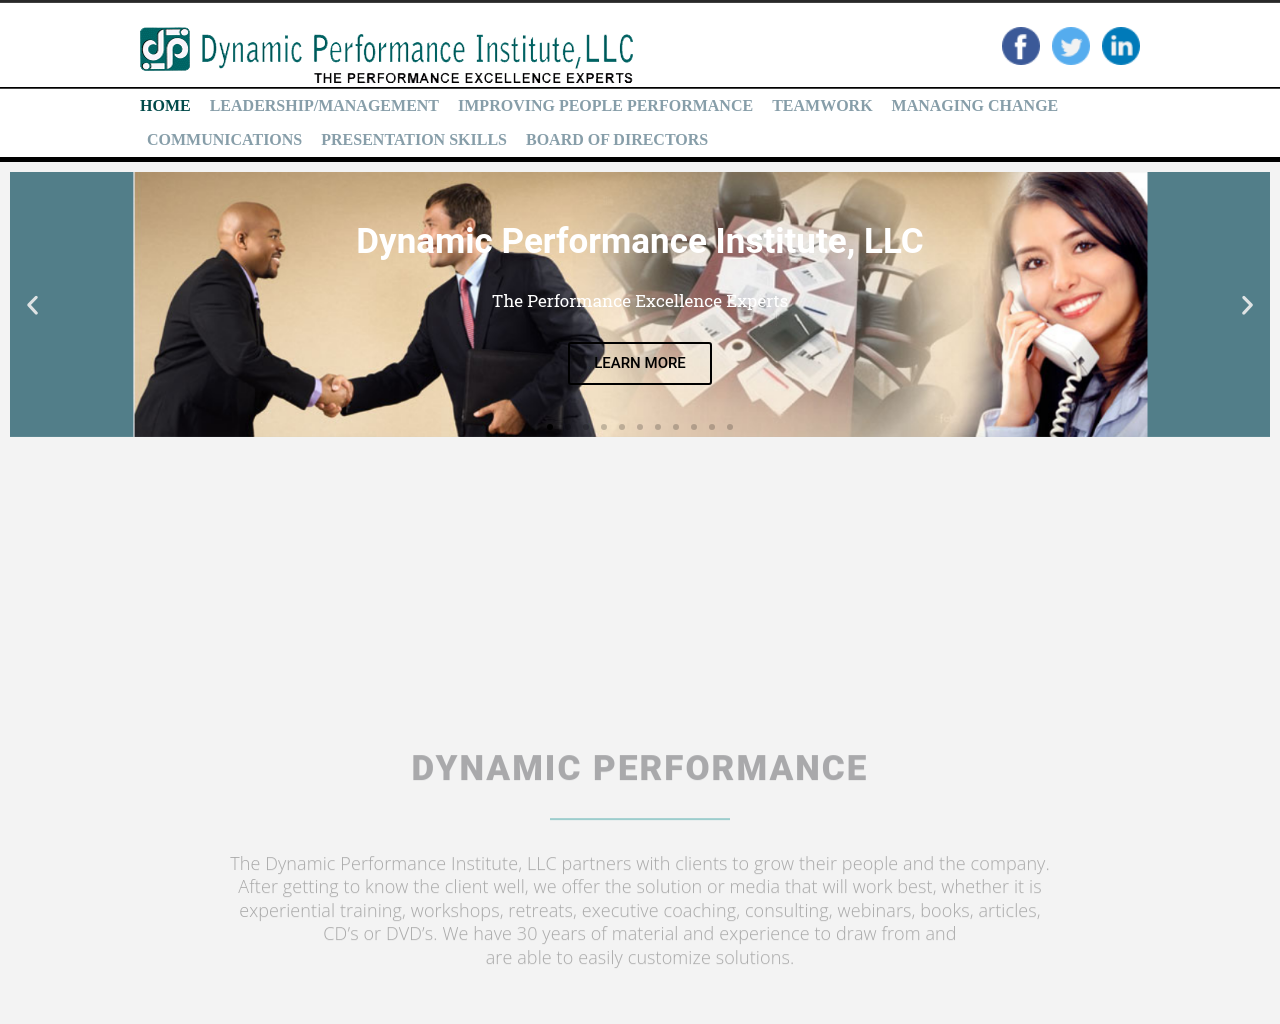 dynamicperformance.com